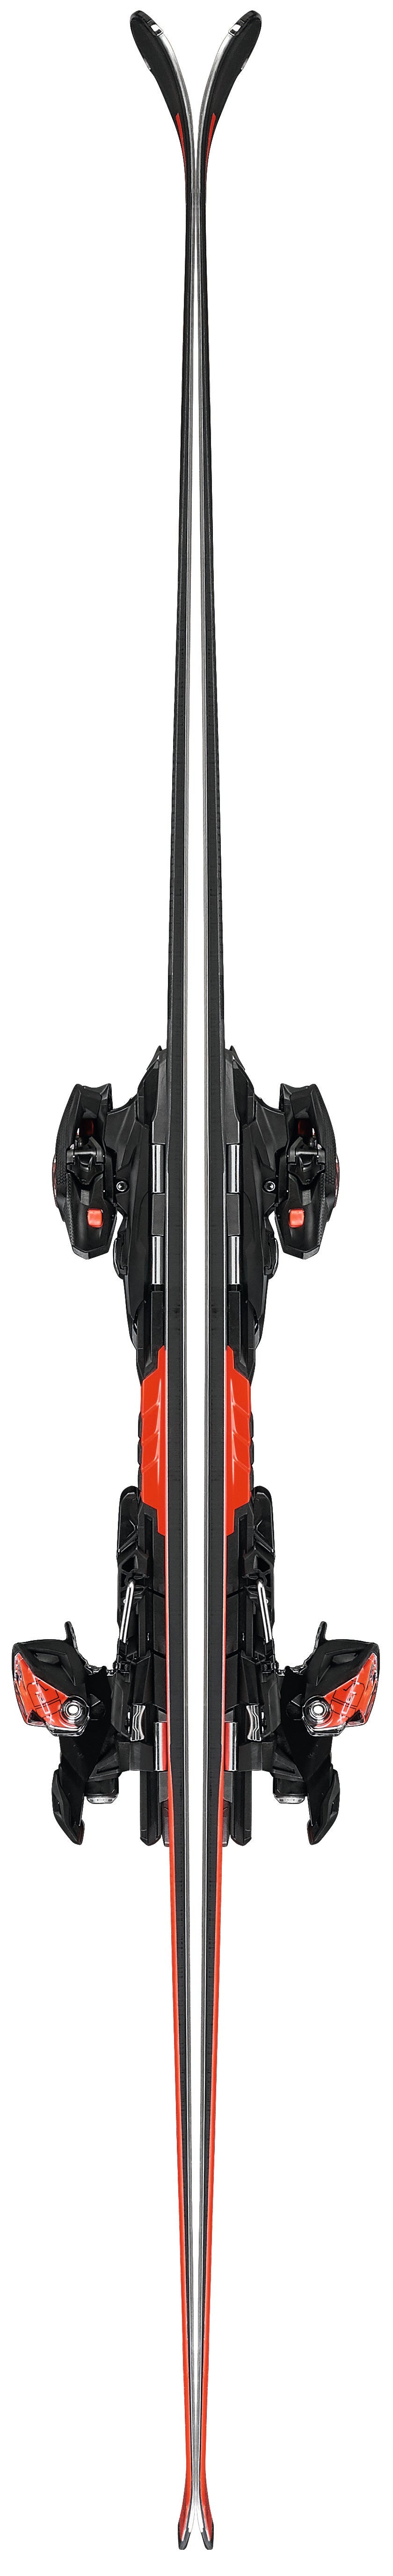 Nordica Spitfire 80 Skis 2023 w/bindings - Ski Depot / RaceSkis.com